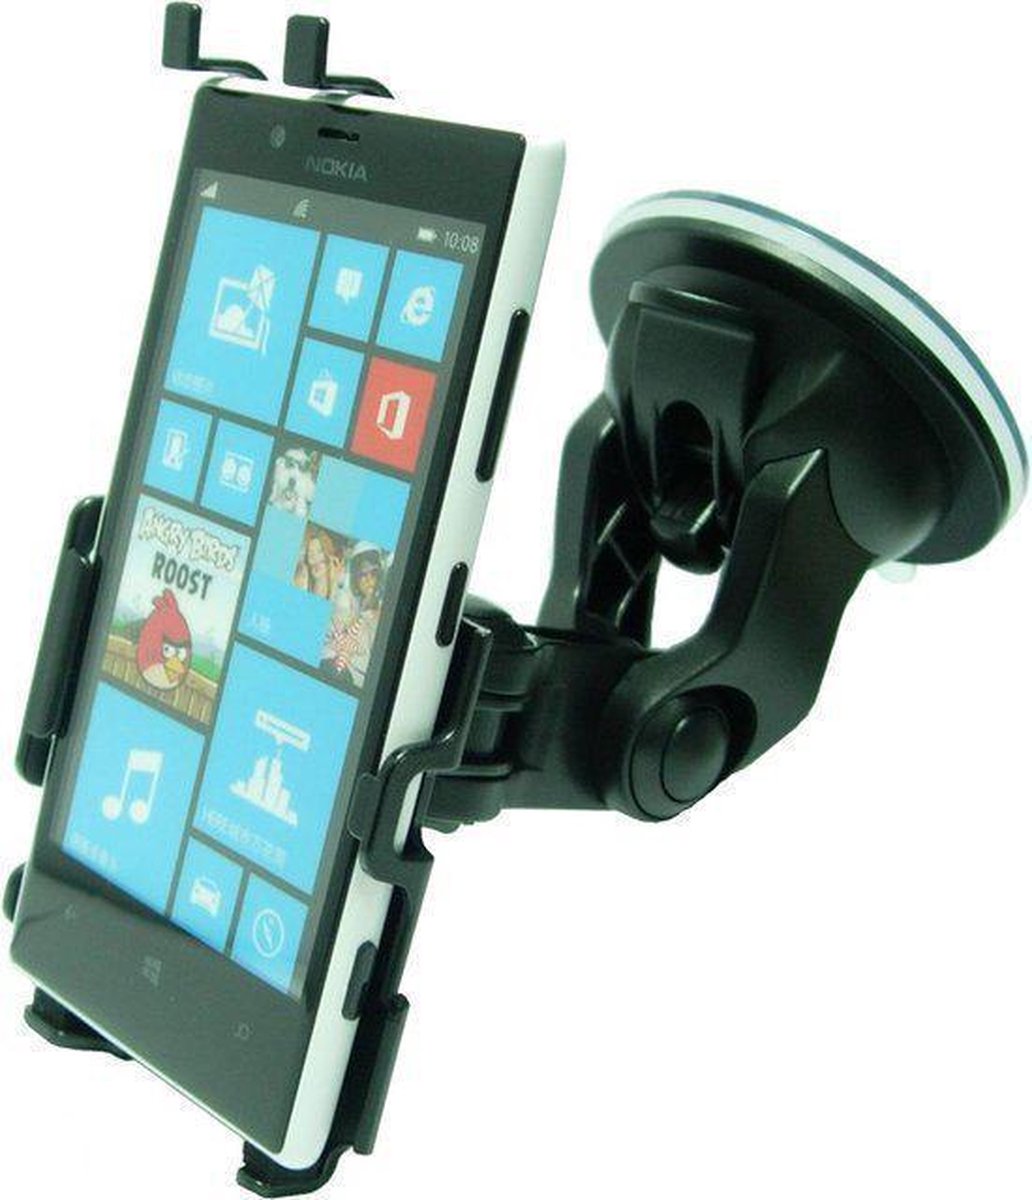 Haicom Autohouder voor de Nokia Lumia 520 (HI-271)